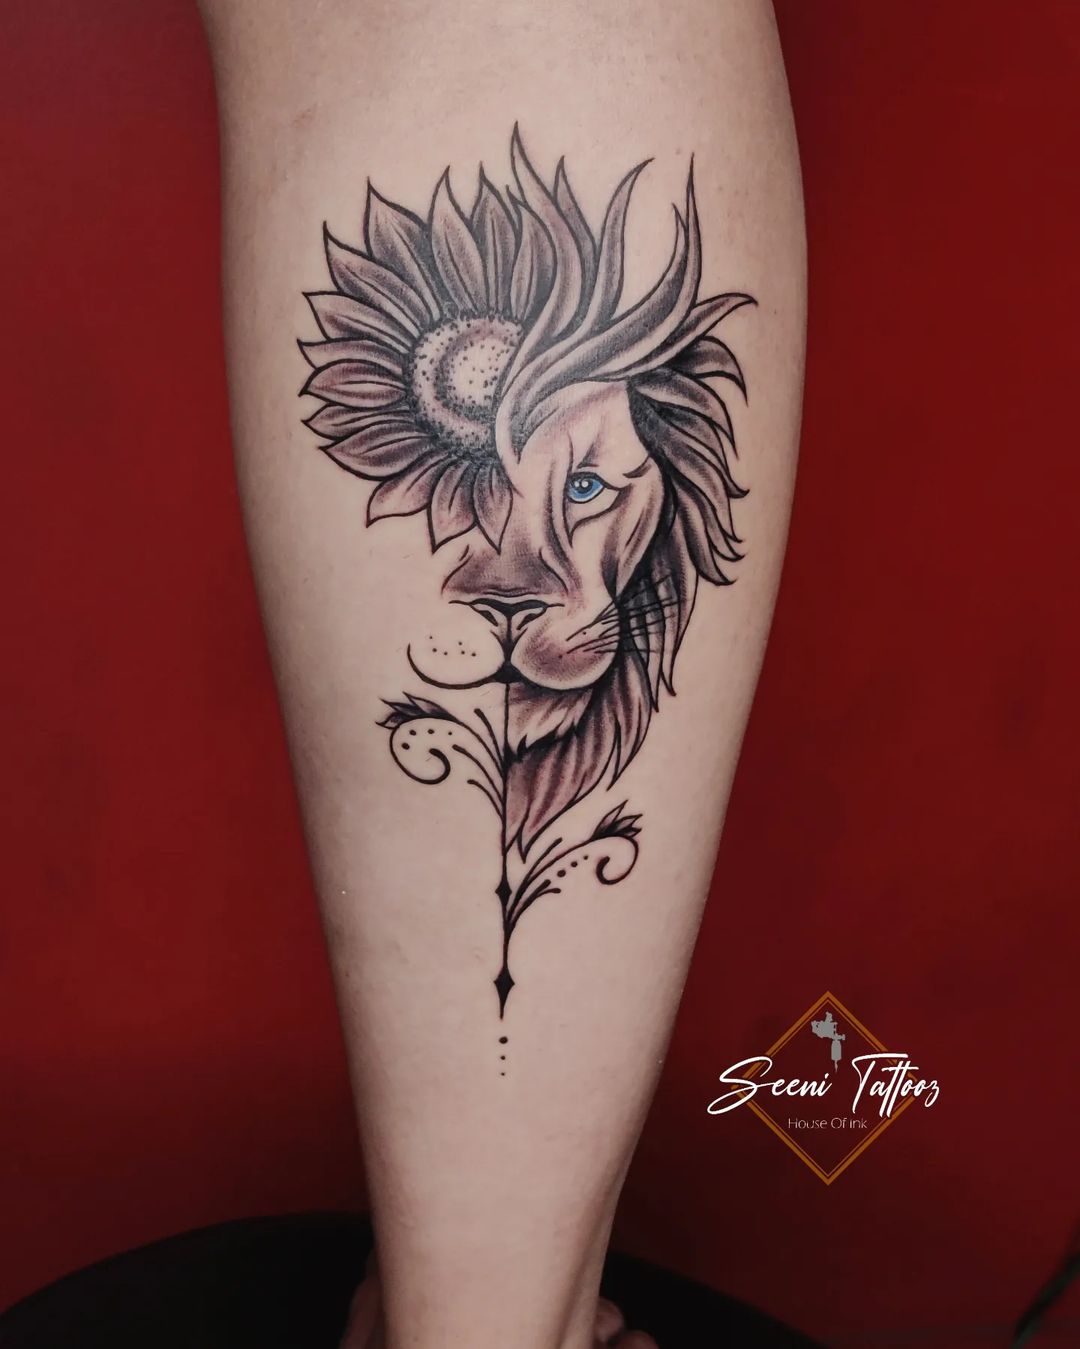 ArtStation  Lion lotus and sunflower tattoo idea